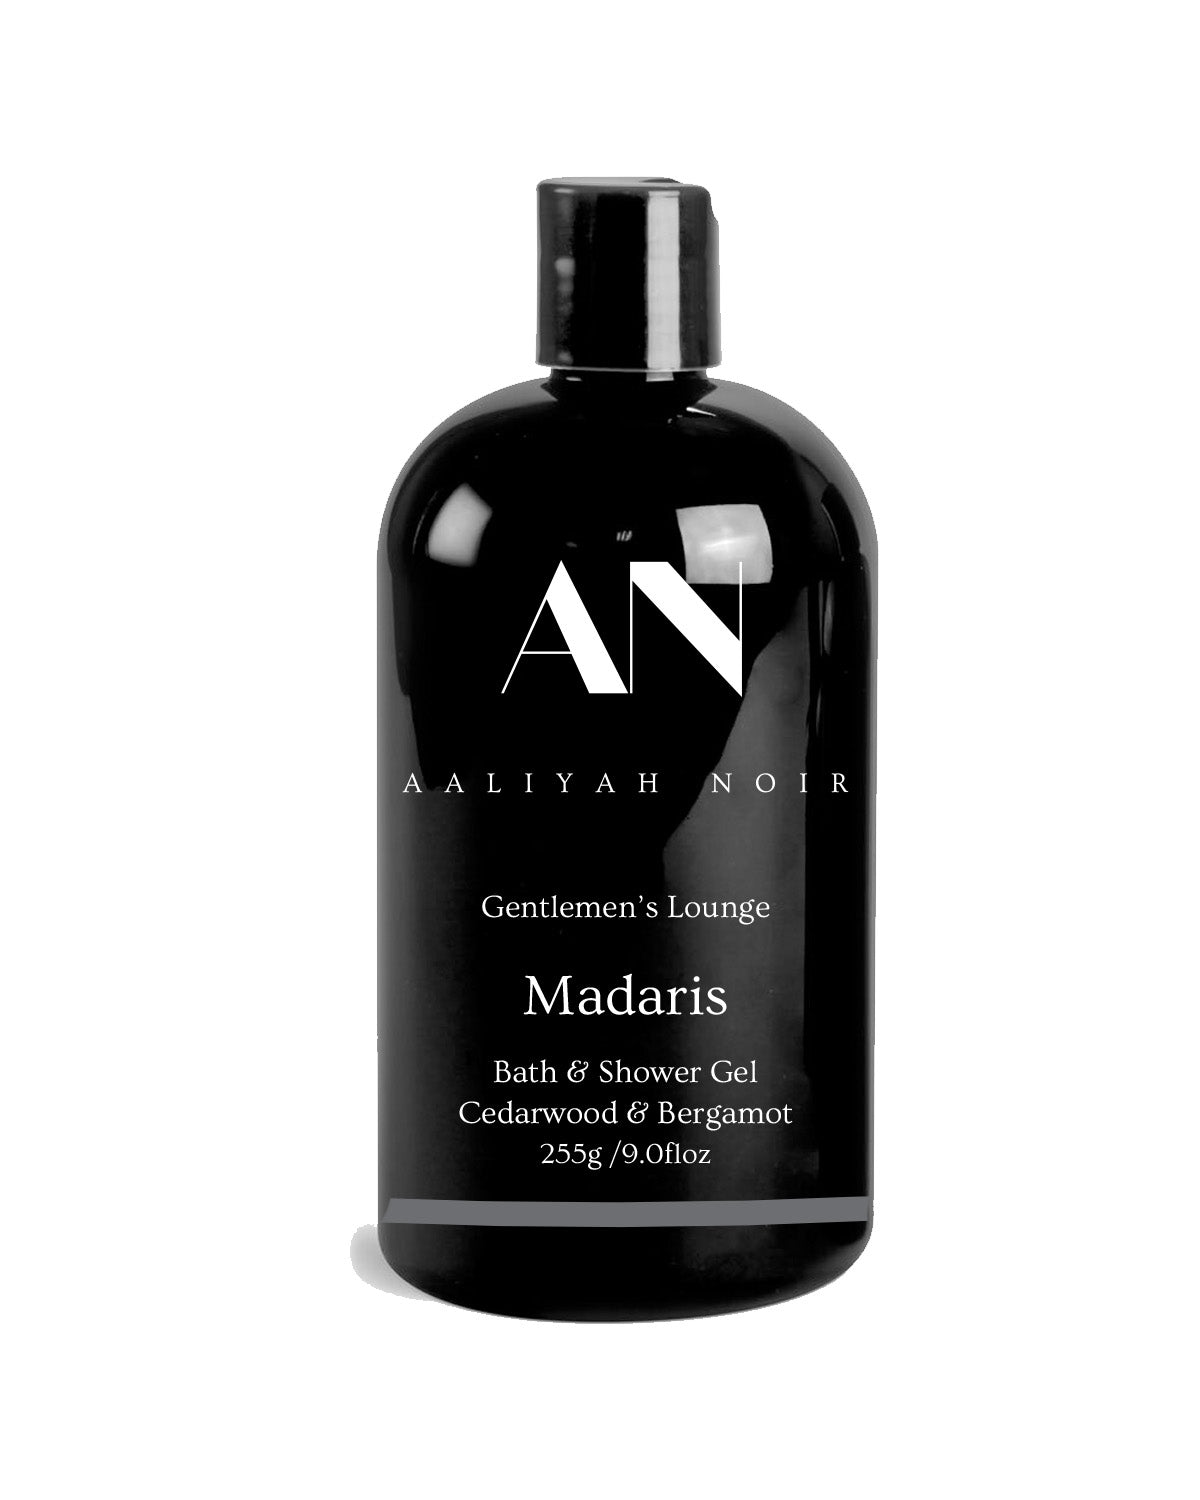 Madaris Bath & Shower Gel